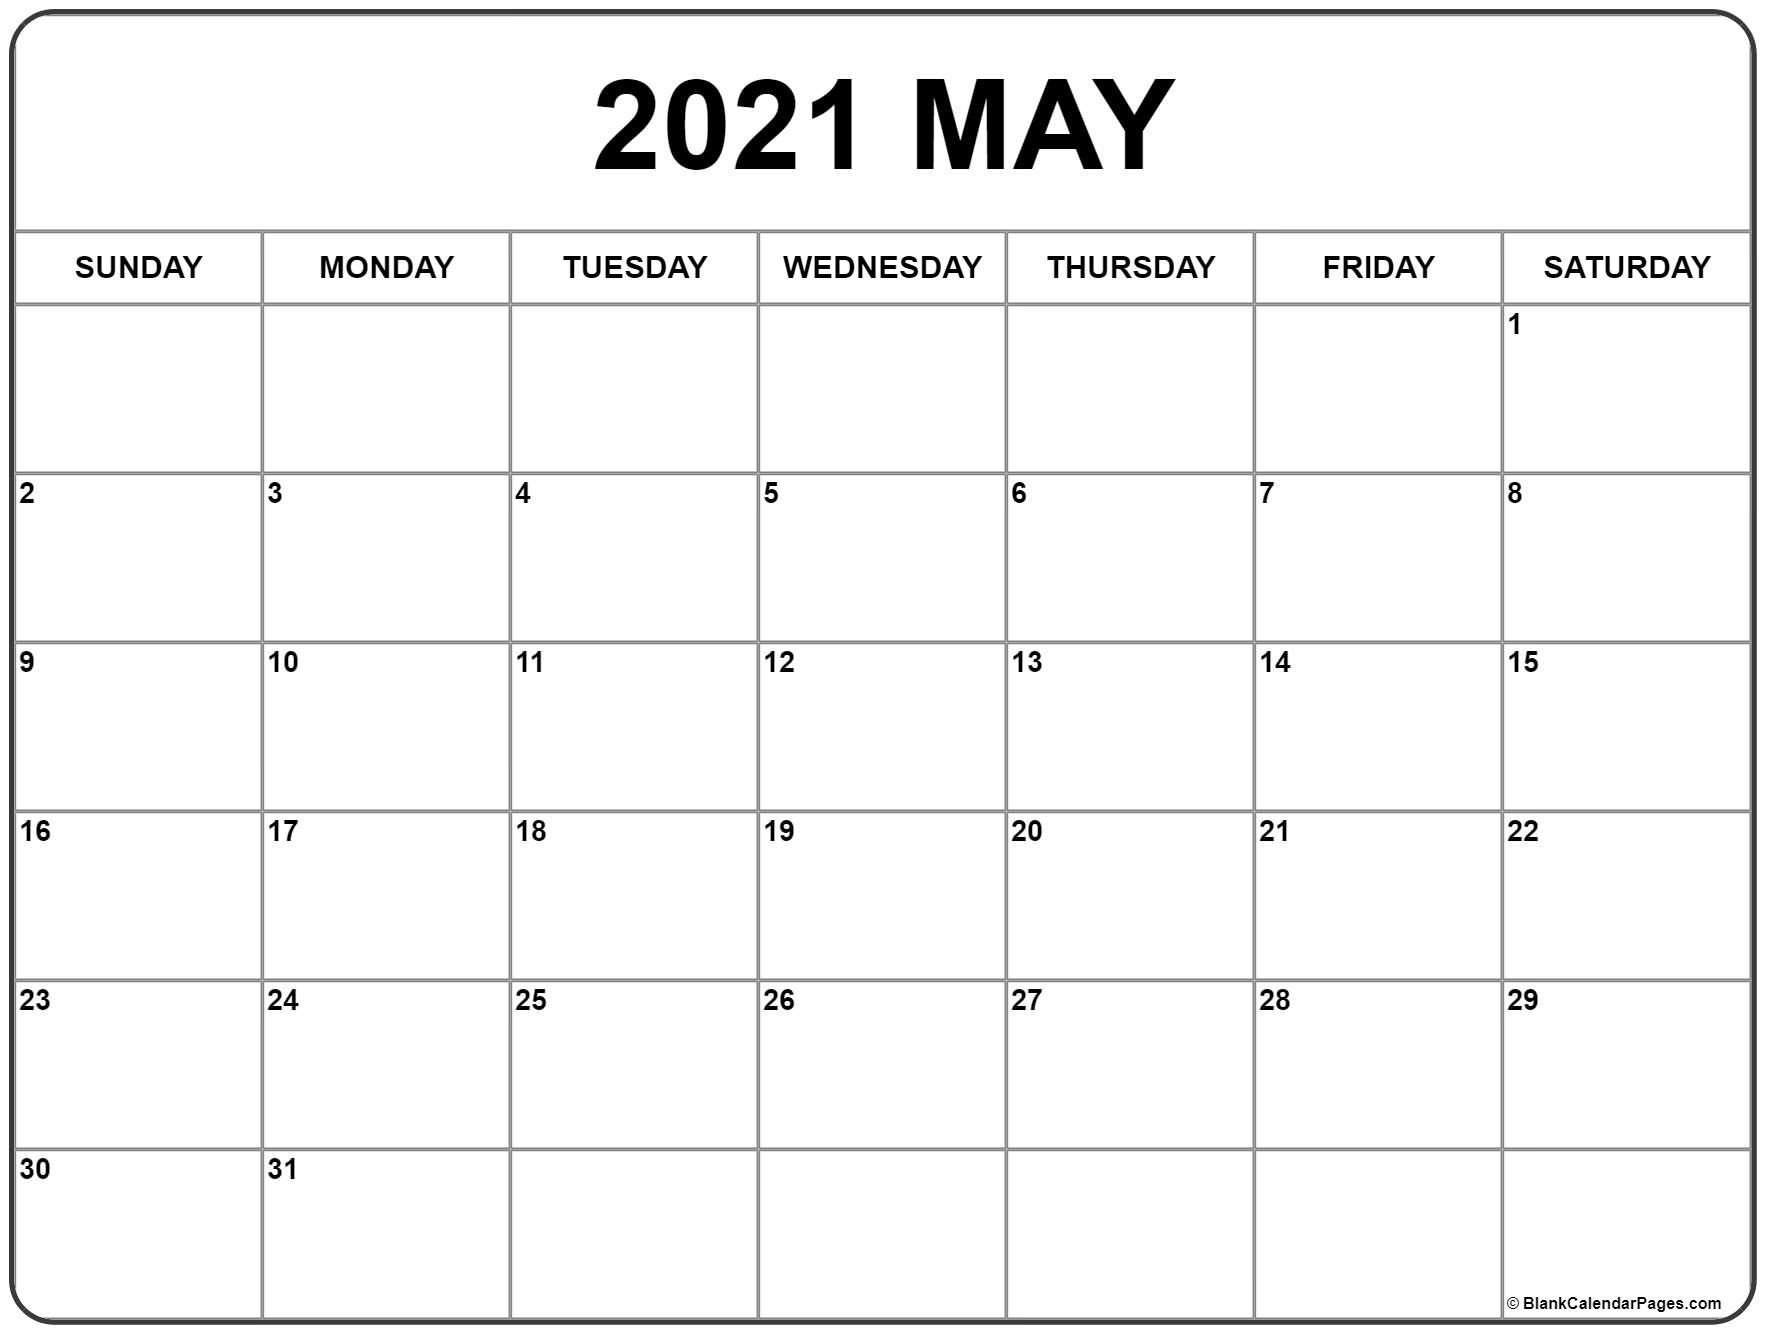 Blank Monthly Calendar 2021 Printable | Printable March-Due Date Of August 01 2021 Weekly Calendar